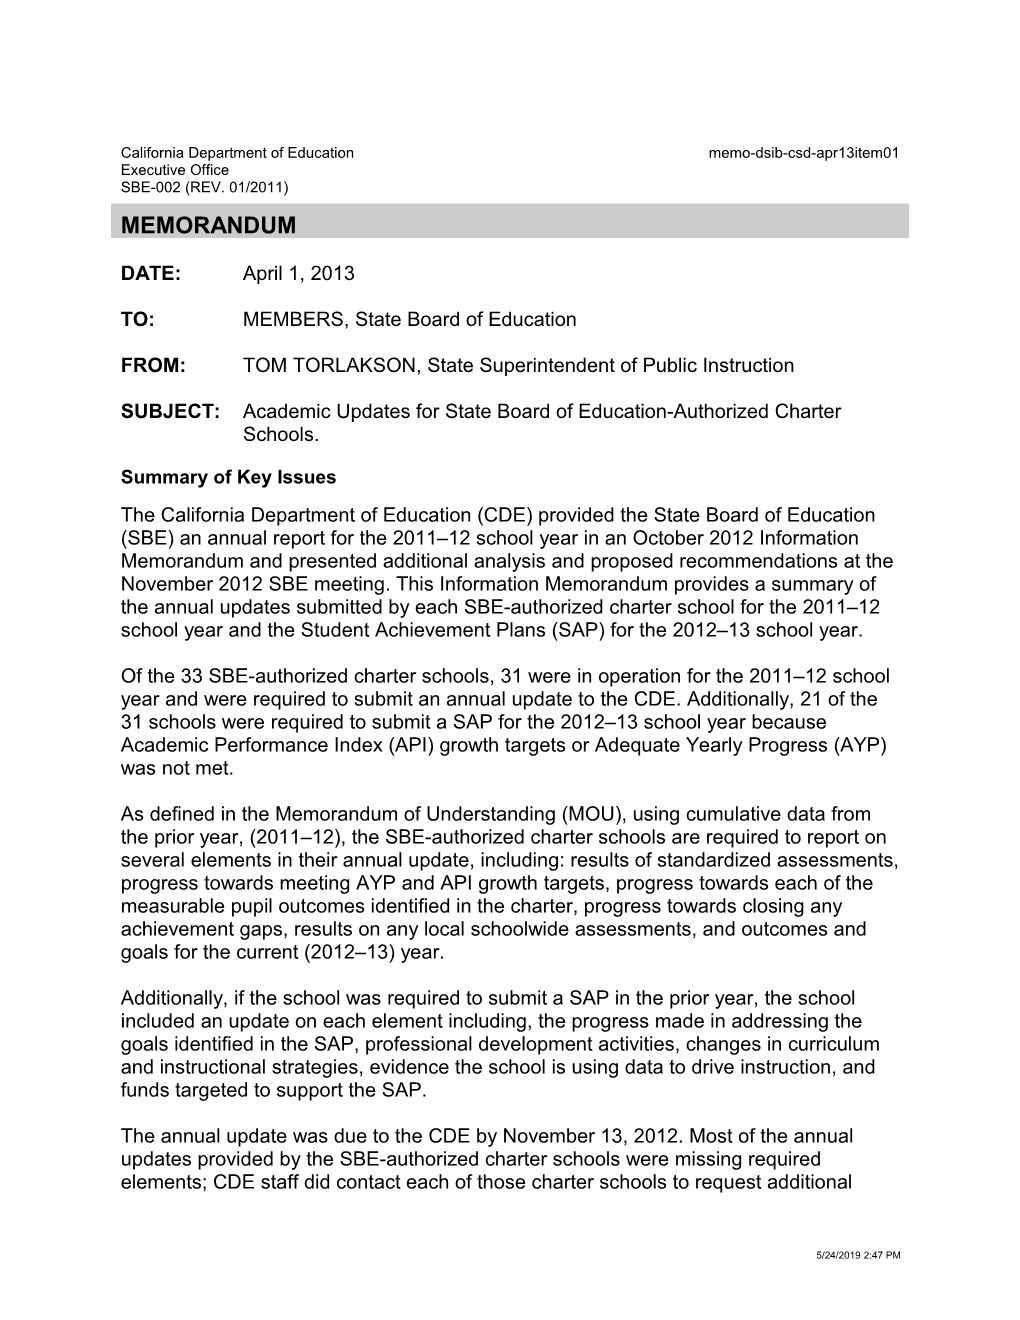 April 2013 Info Memo DSIB CSD Item 1 - Information Memorandum (CA State Board of Education)